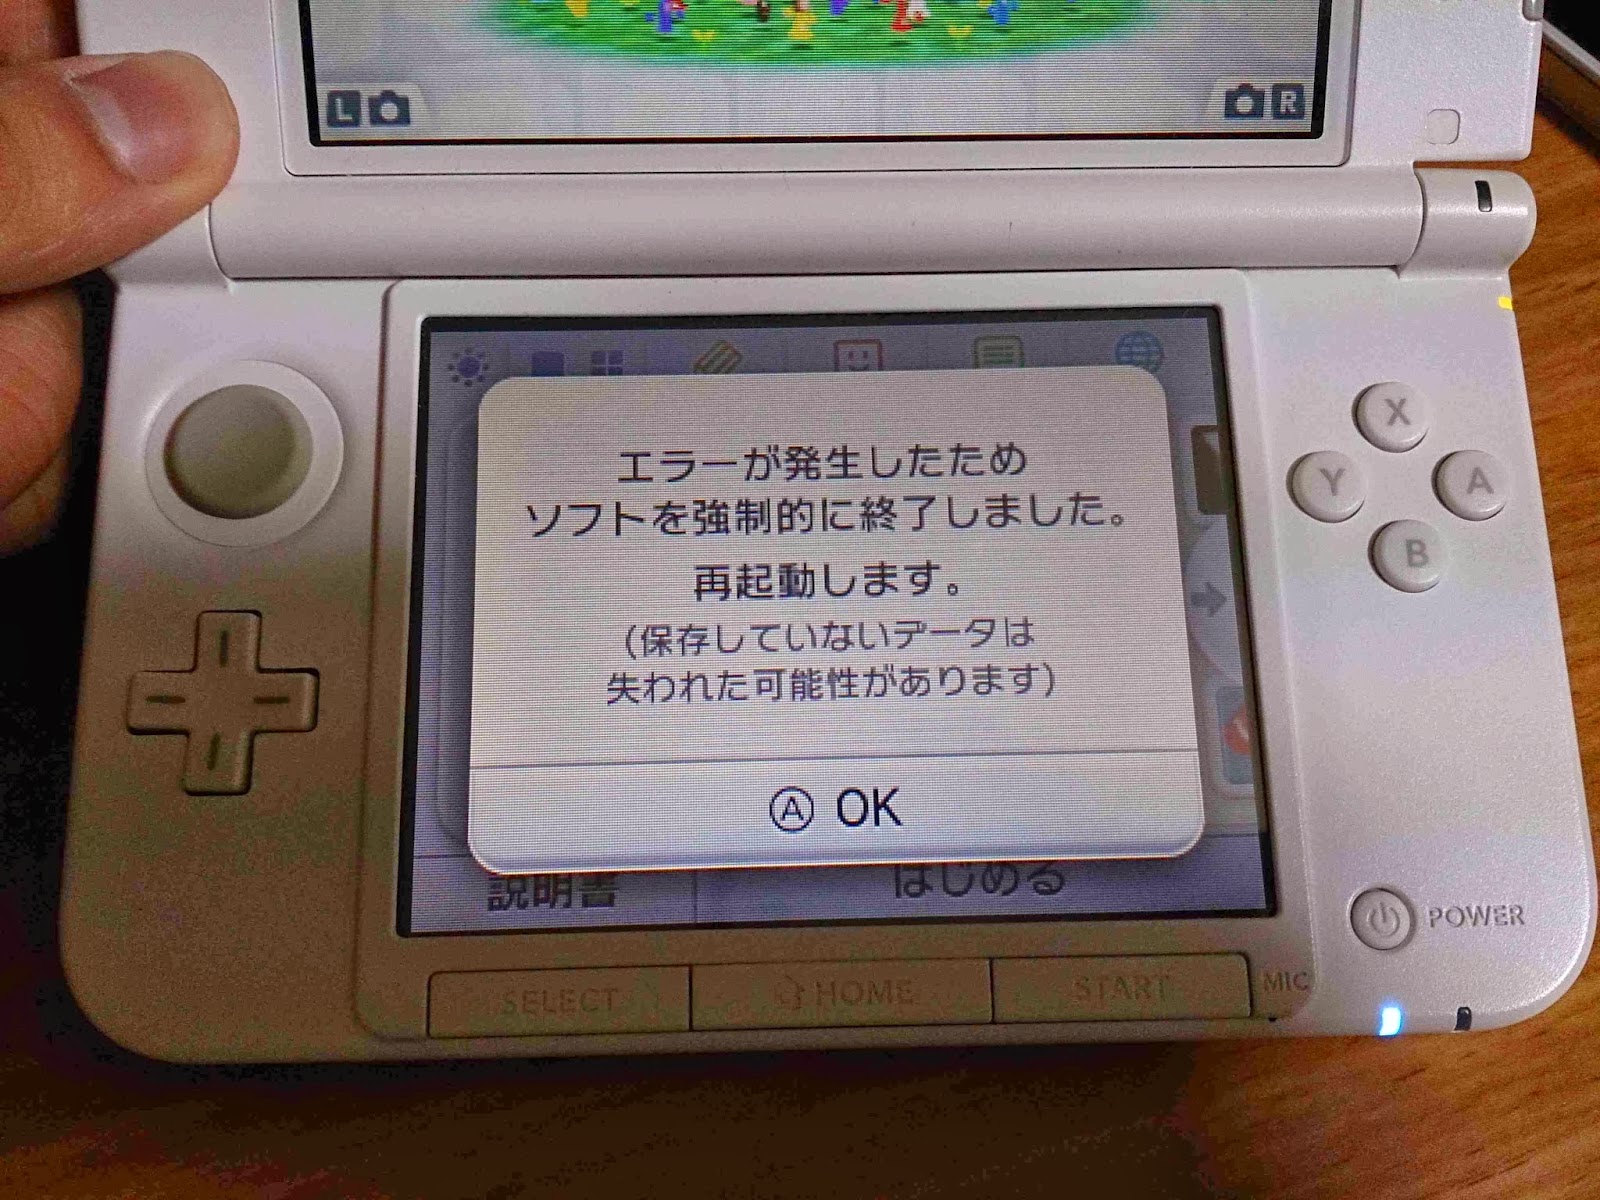 akiraの暇を晒す日記帳的な(暇晒帳): 3DSの「すれちがいMii広場」が更新された時の事を暇晒していきます。